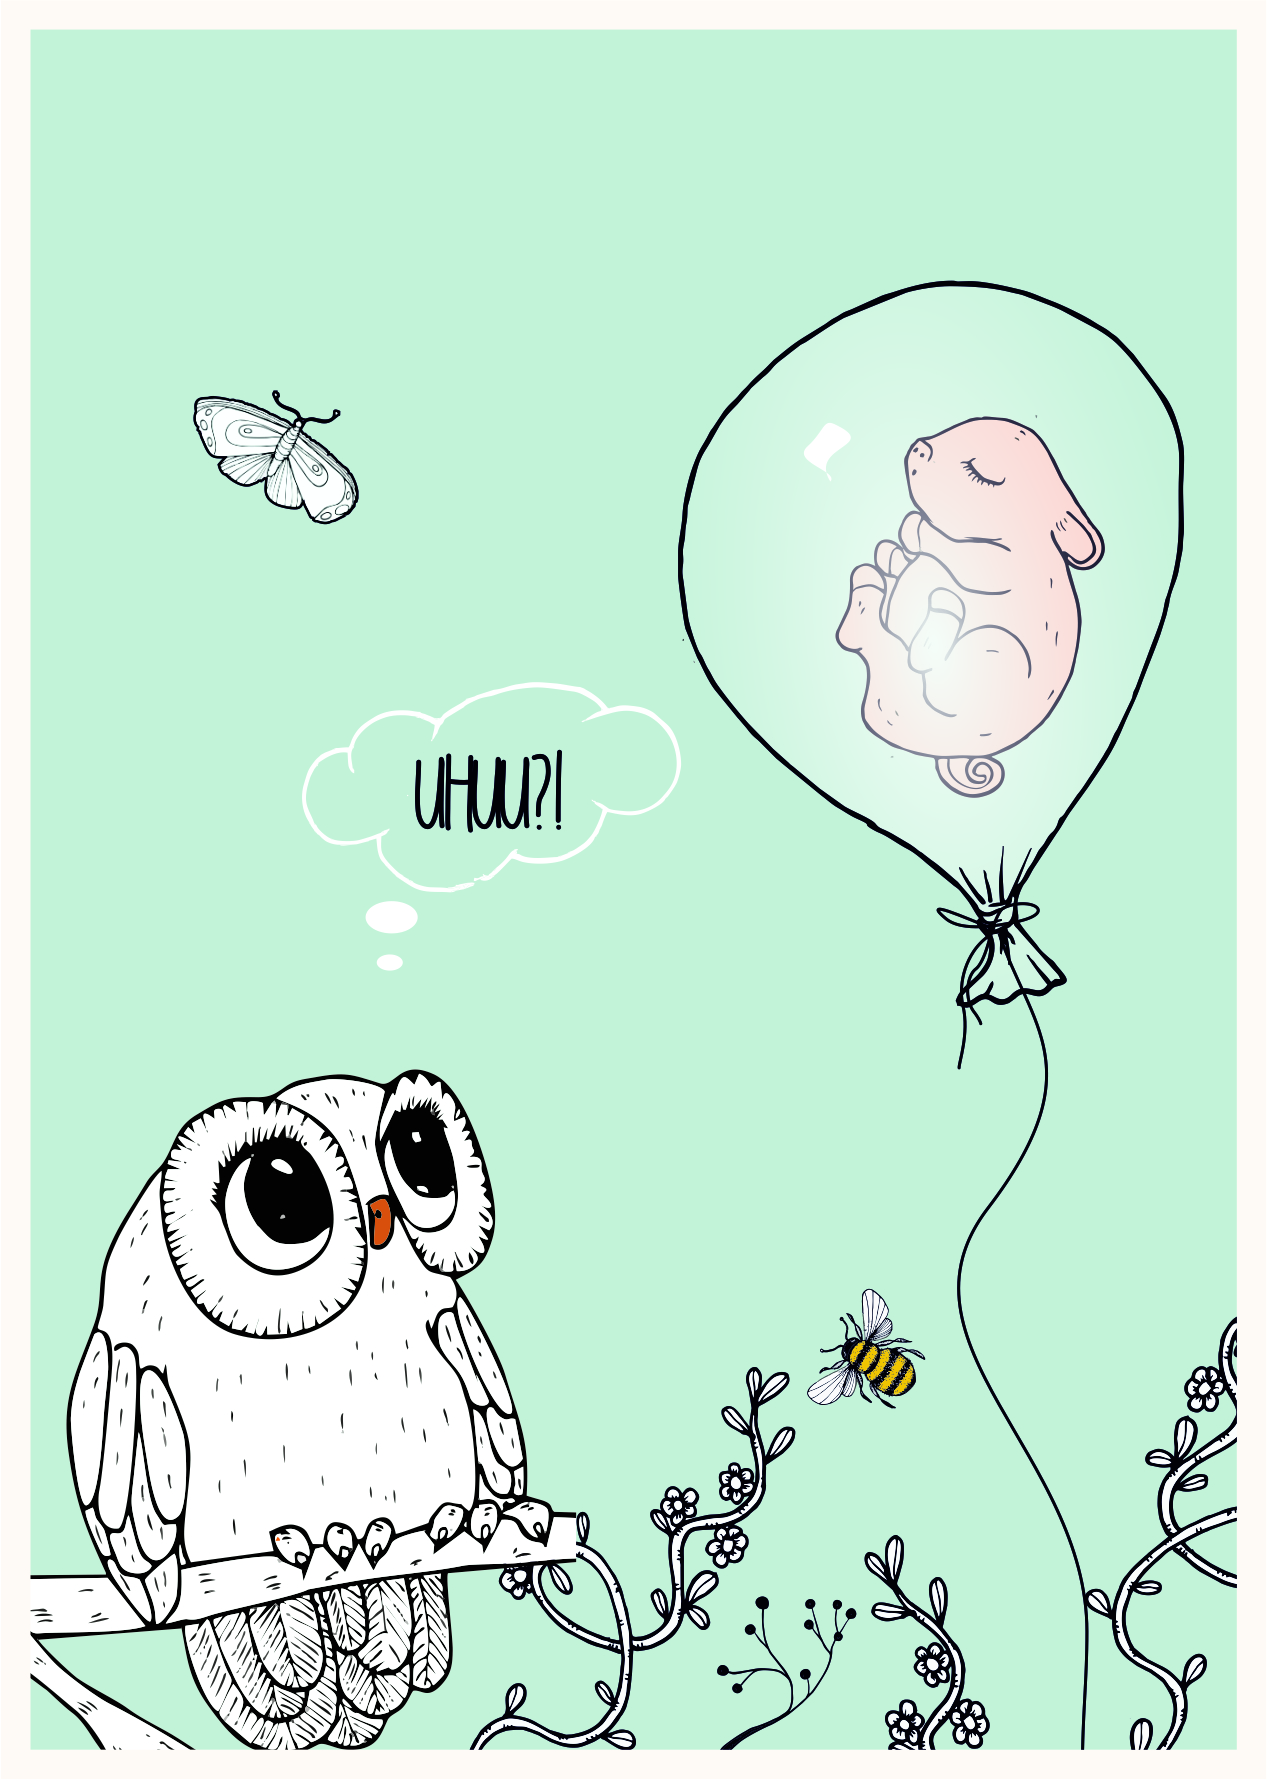 Owl & Piglet - uhuuh